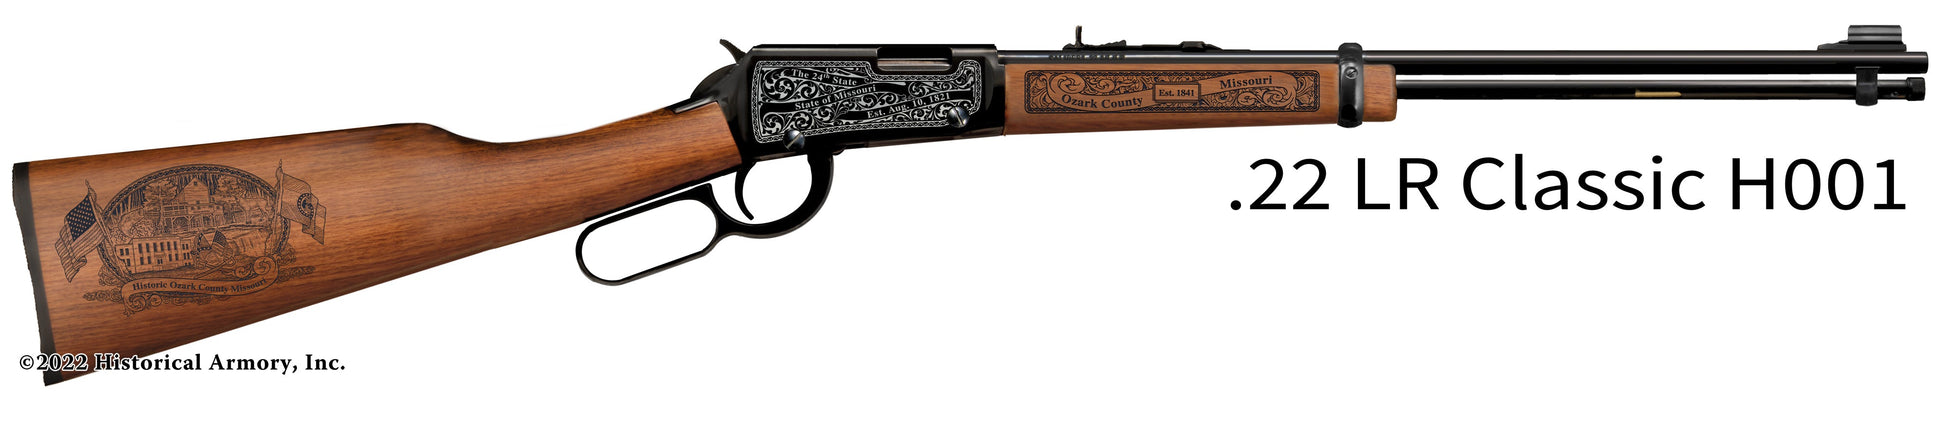 Ozark County Missouri Engraved Henry H001 Rifle